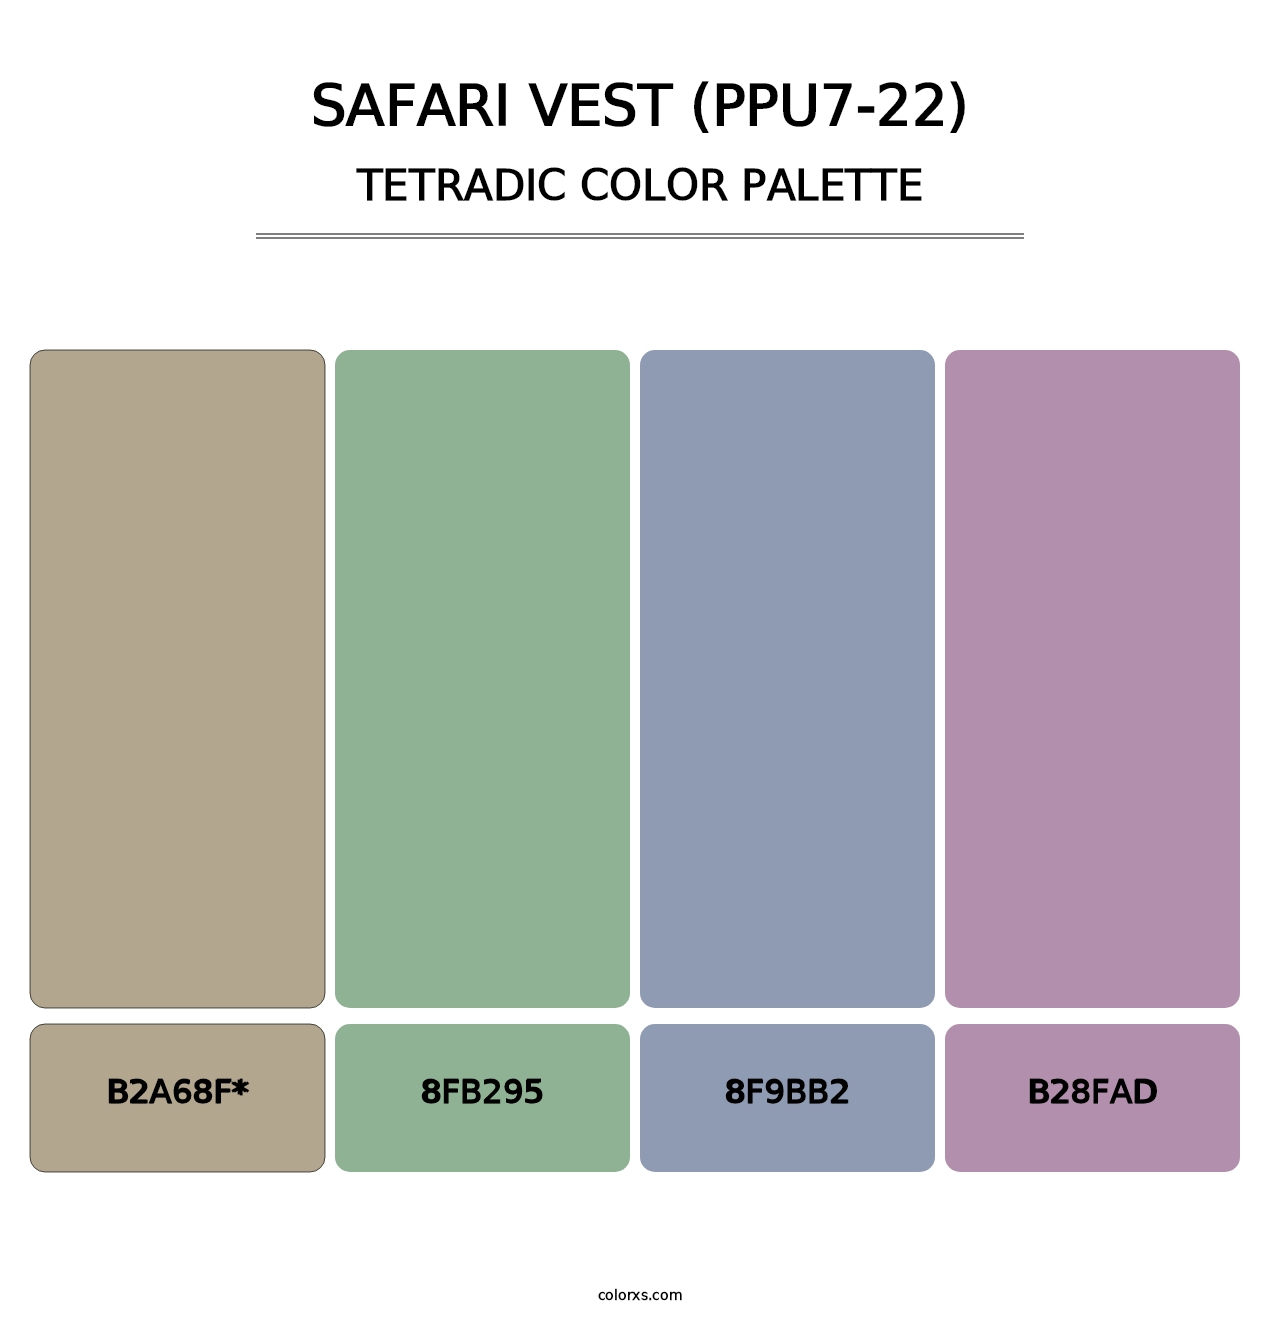 Safari Vest (PPU7-22) - Tetradic Color Palette